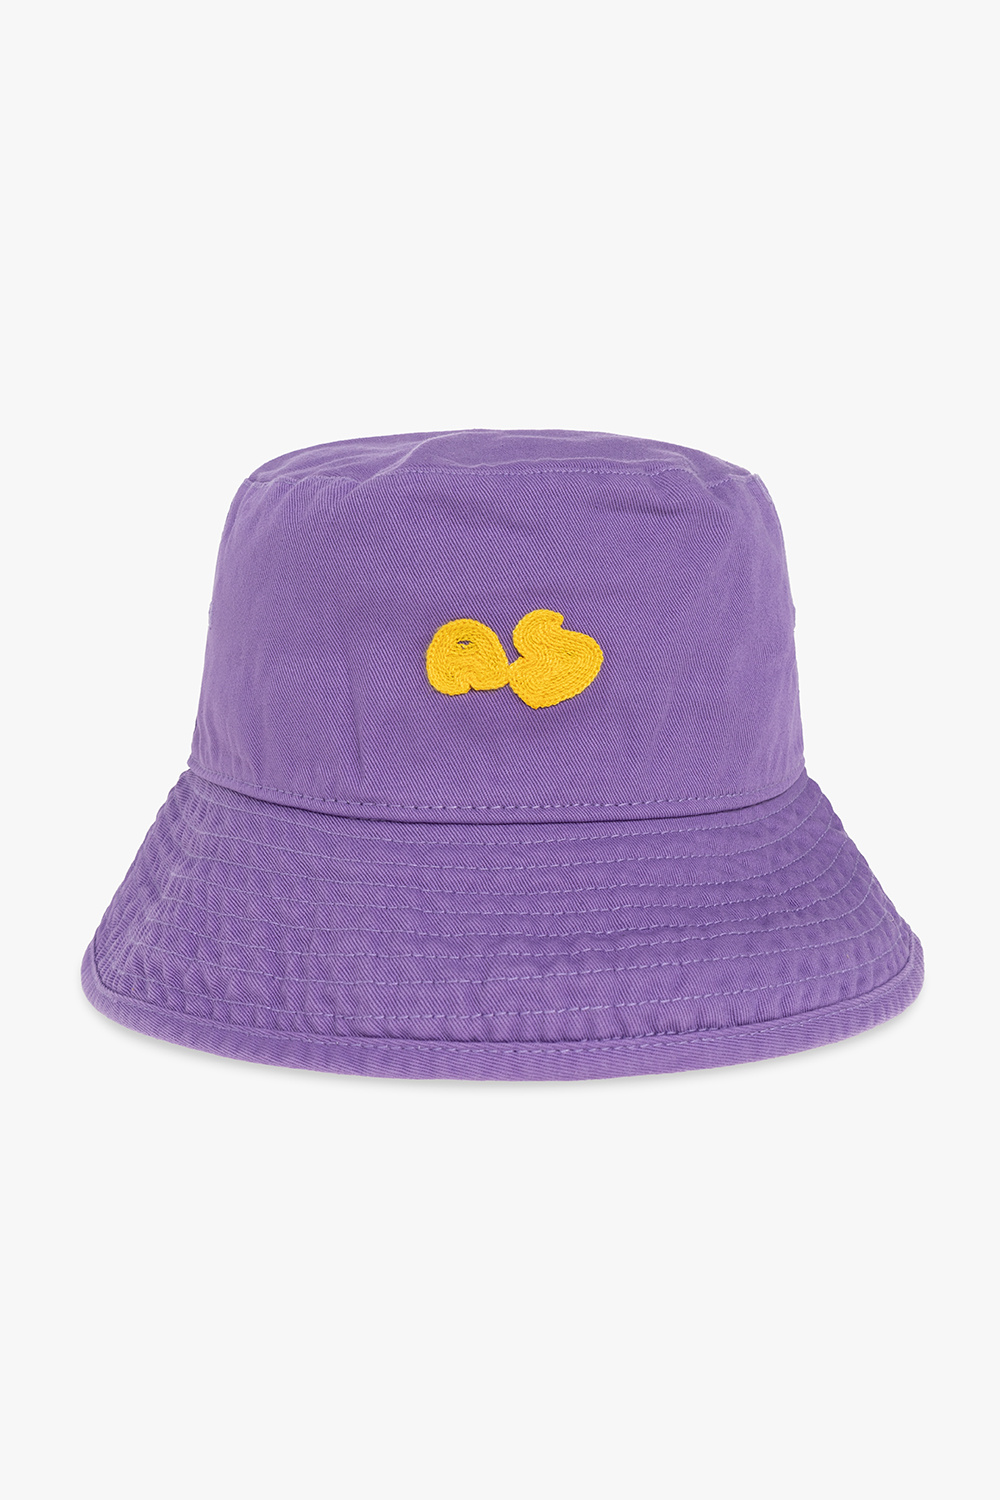 Acne Studios cap hat with logo